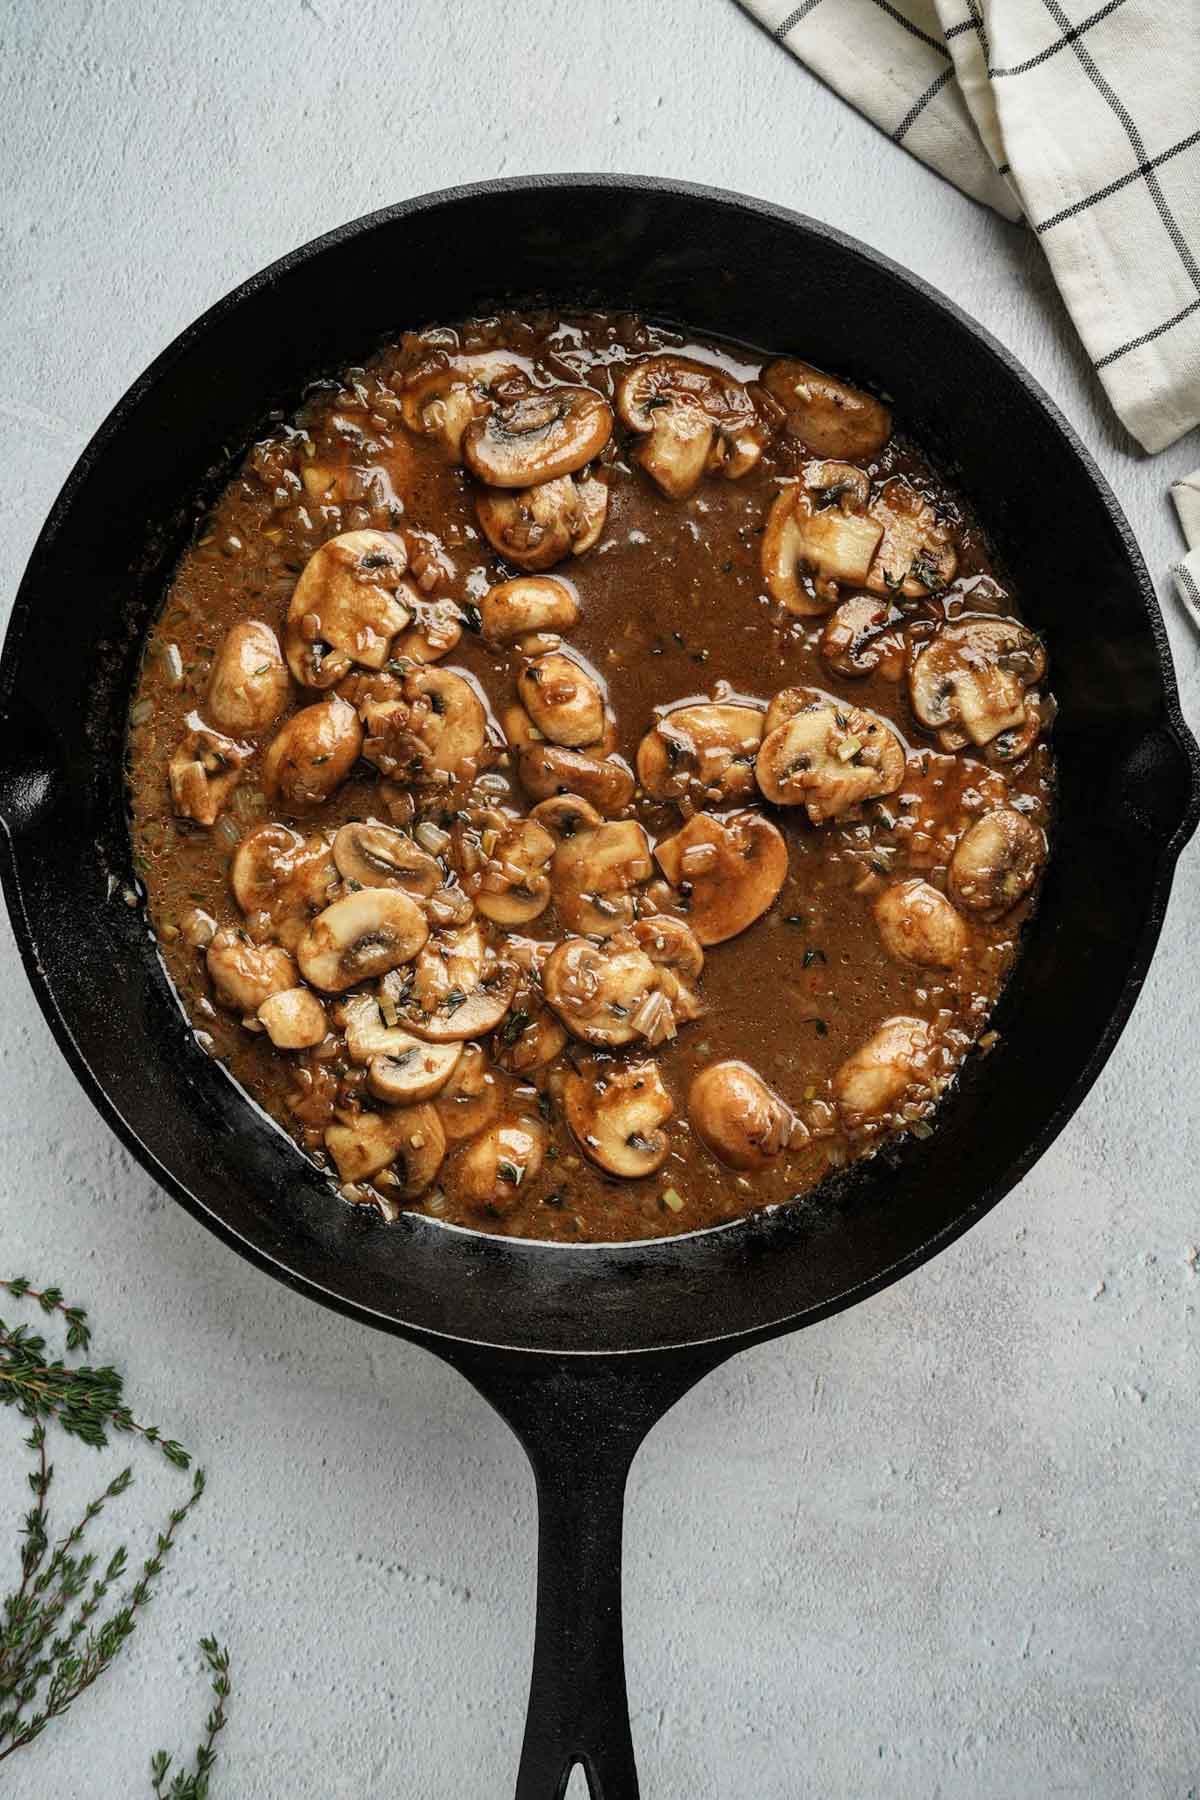 mushrooms in a brown sauce in a skillet